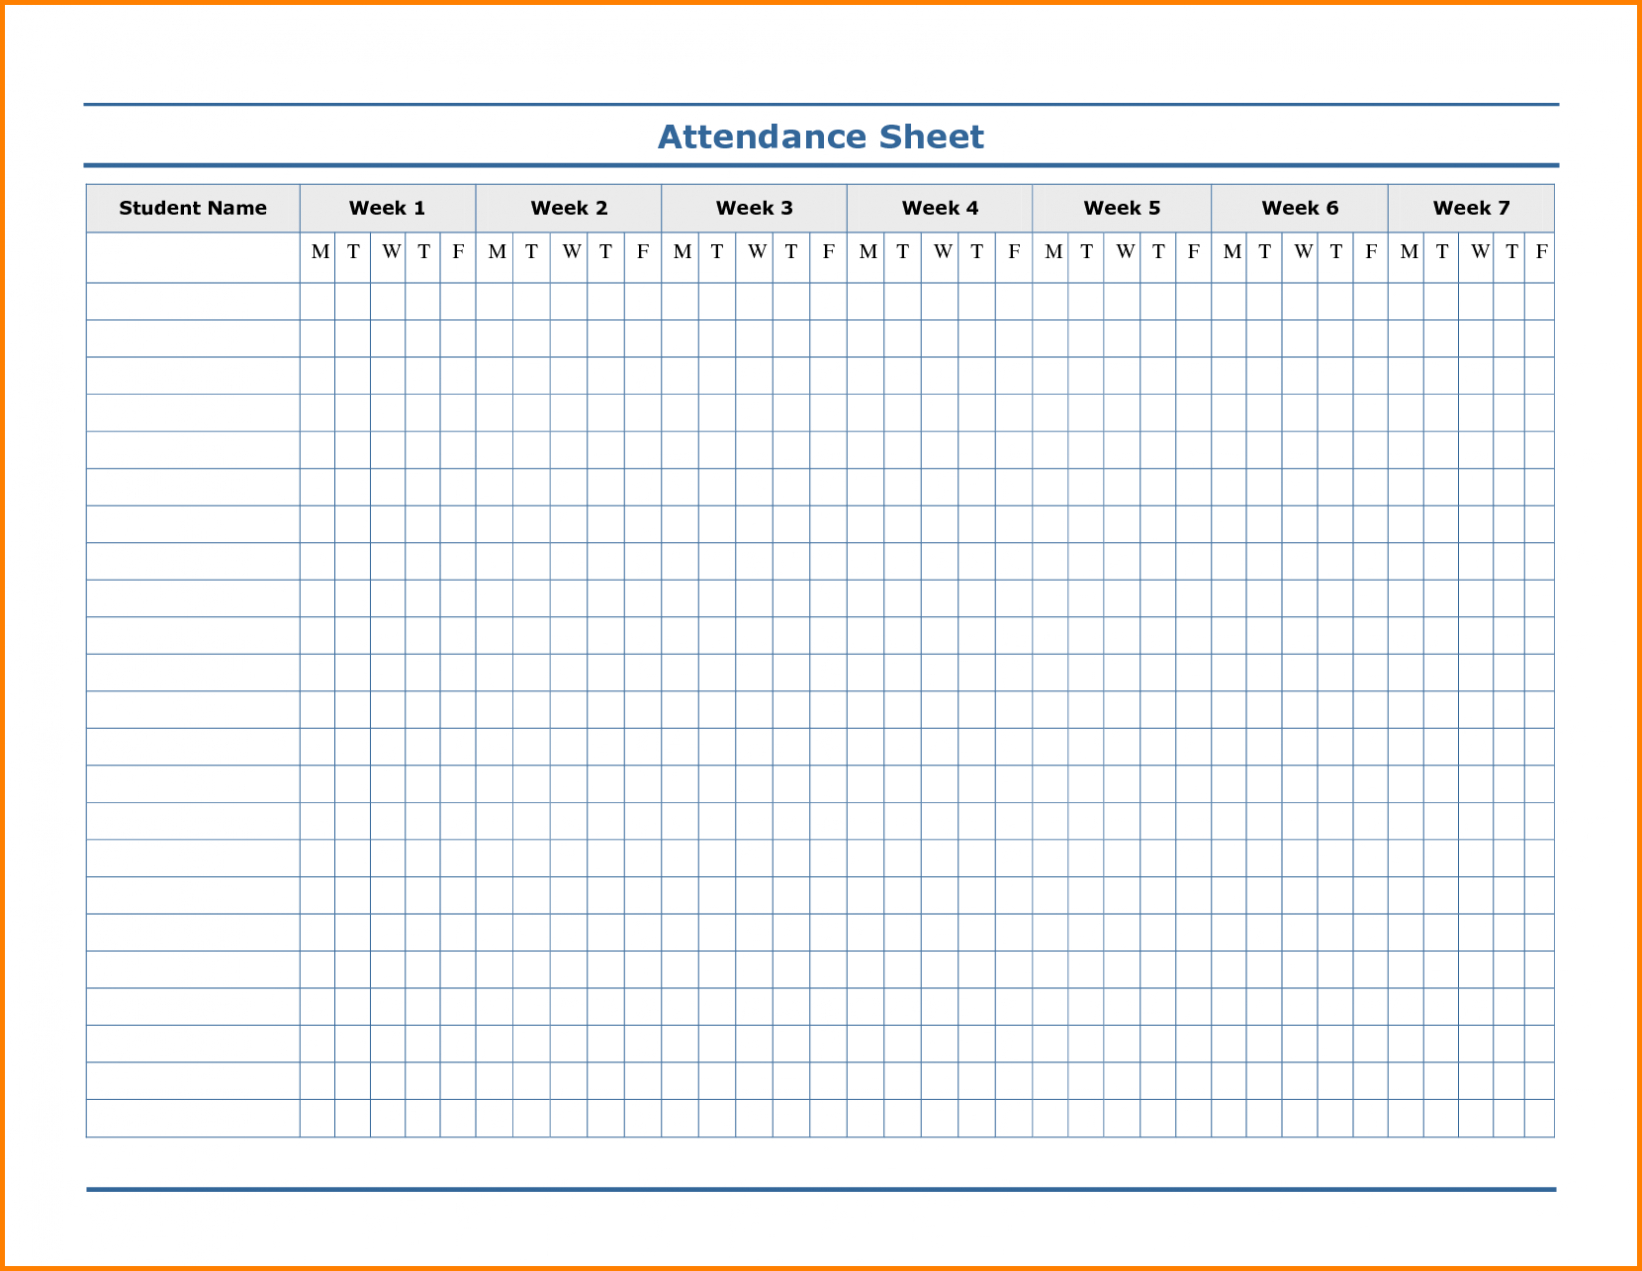 Employee Attendance Sheet Pdf - Togo.wpart.co